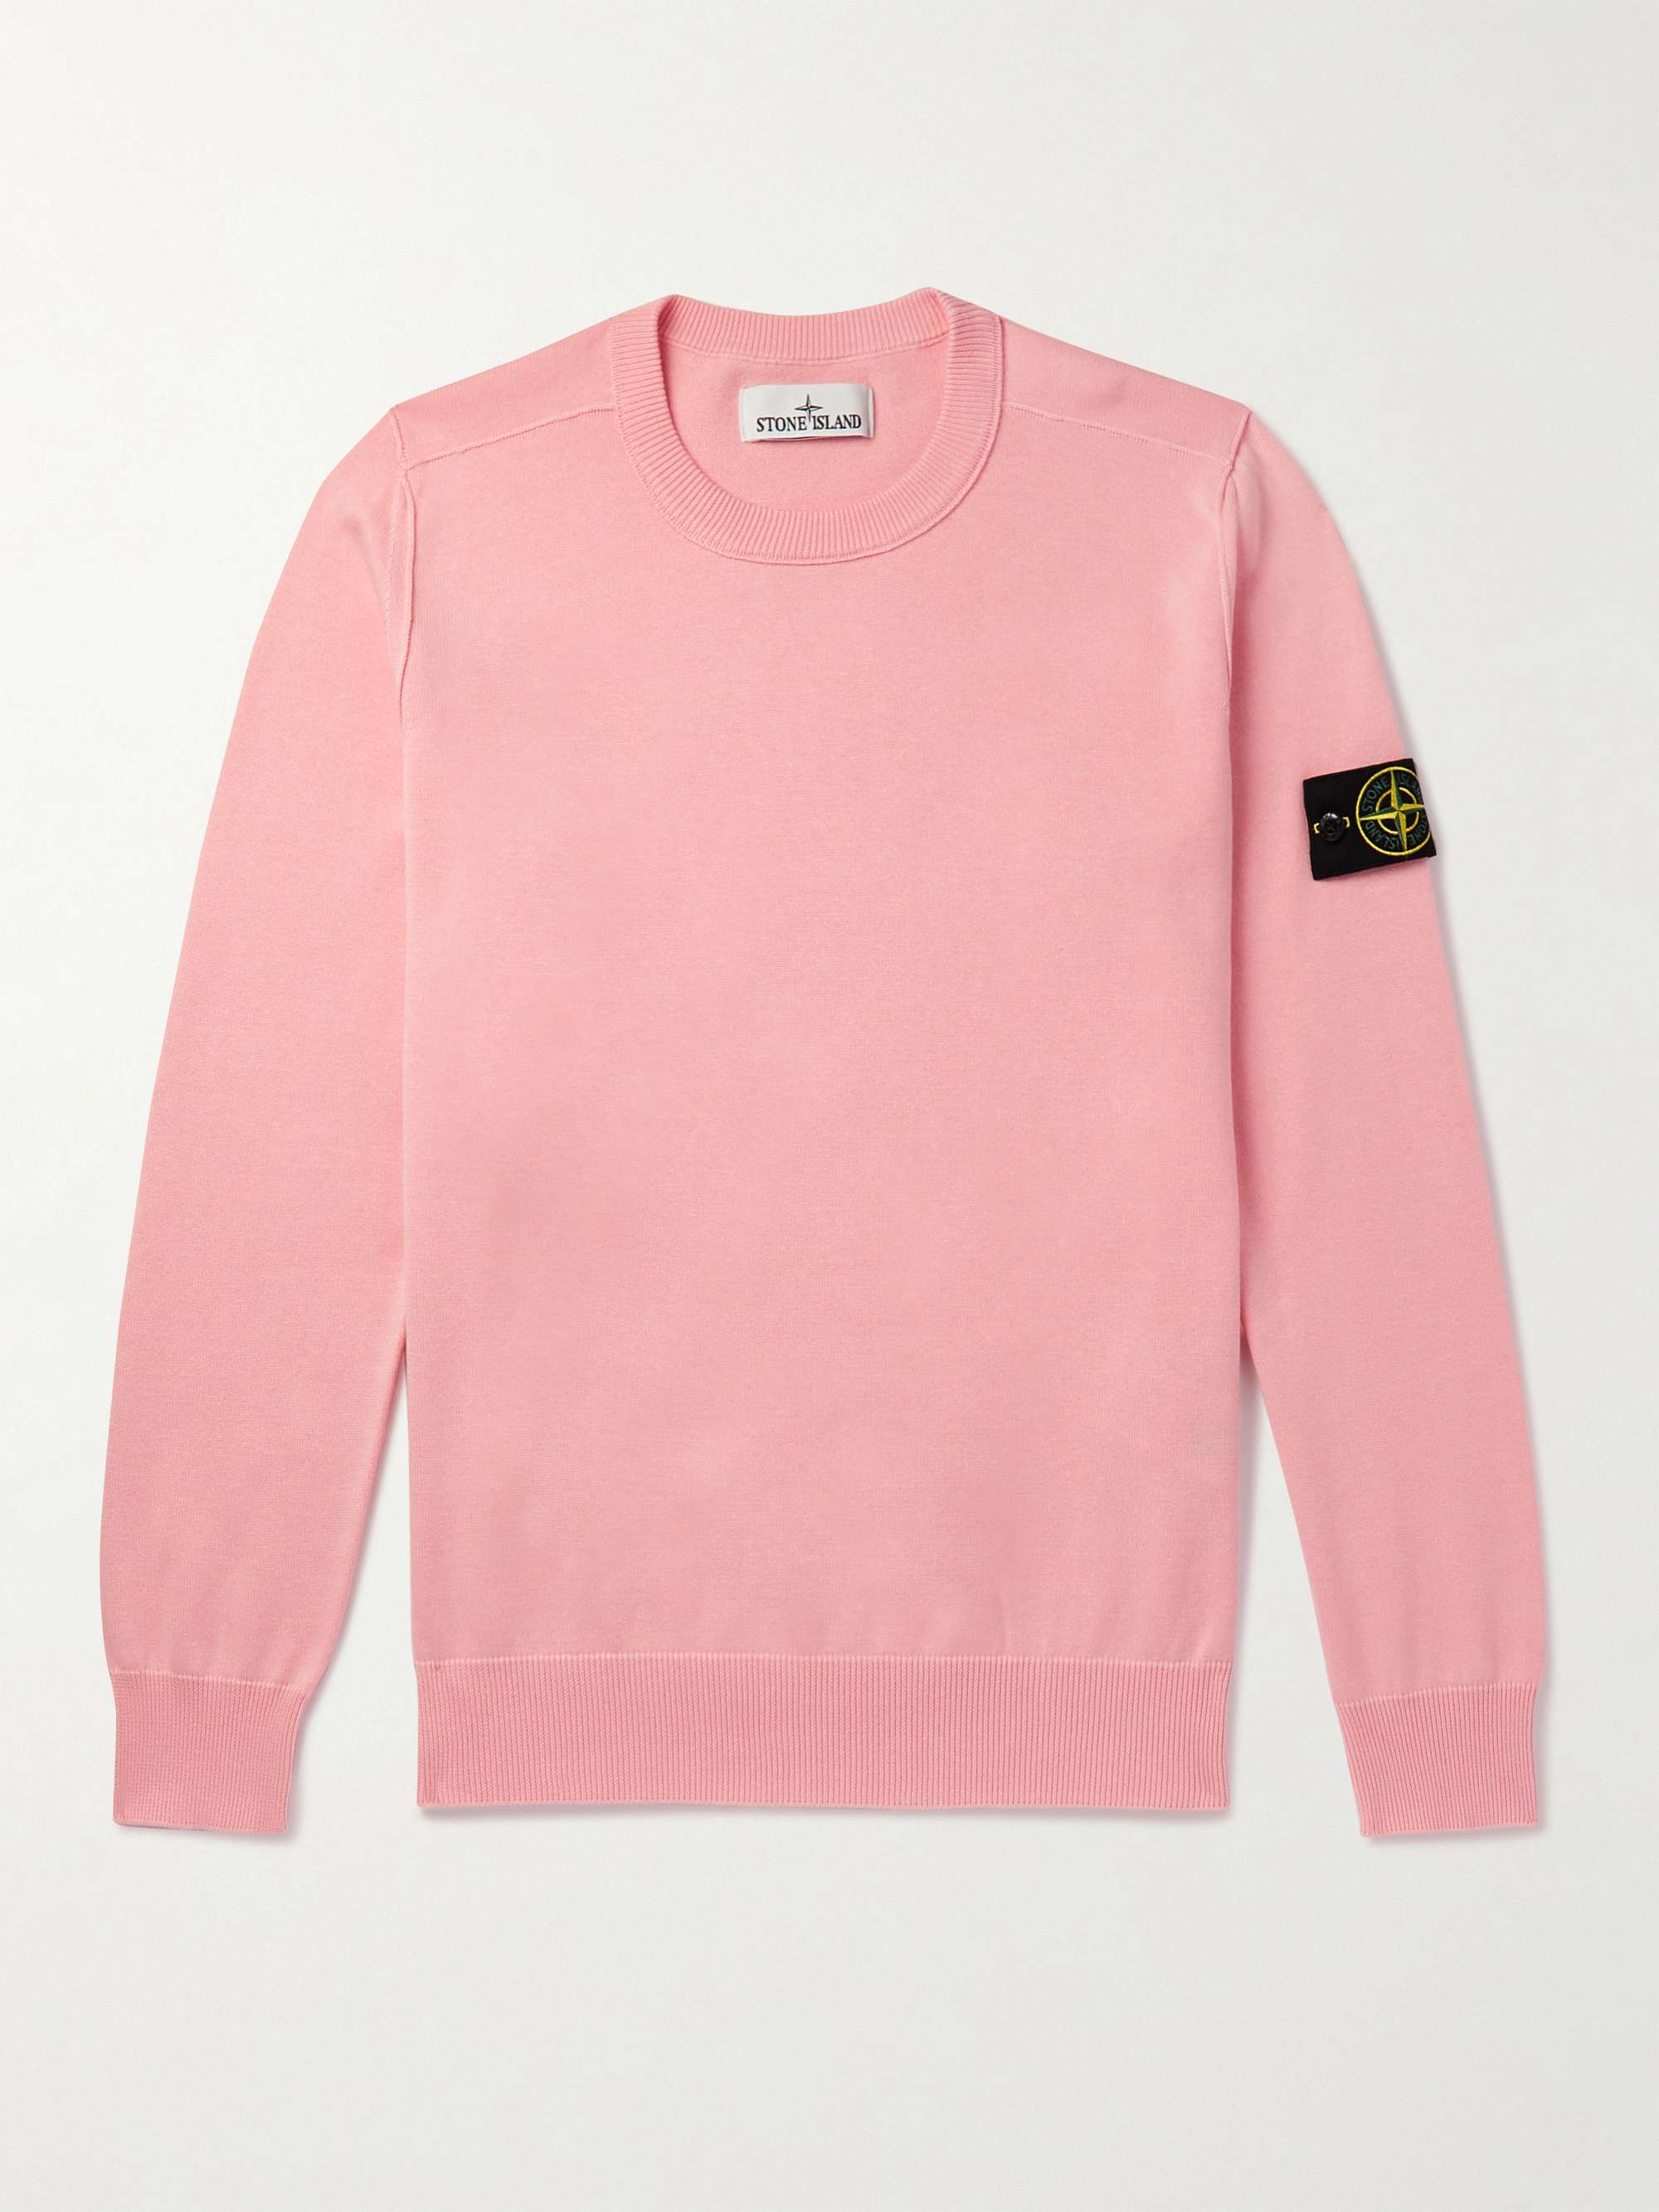 STONE ISLAND Logo-Appliqued Cotton Sweater,Pink